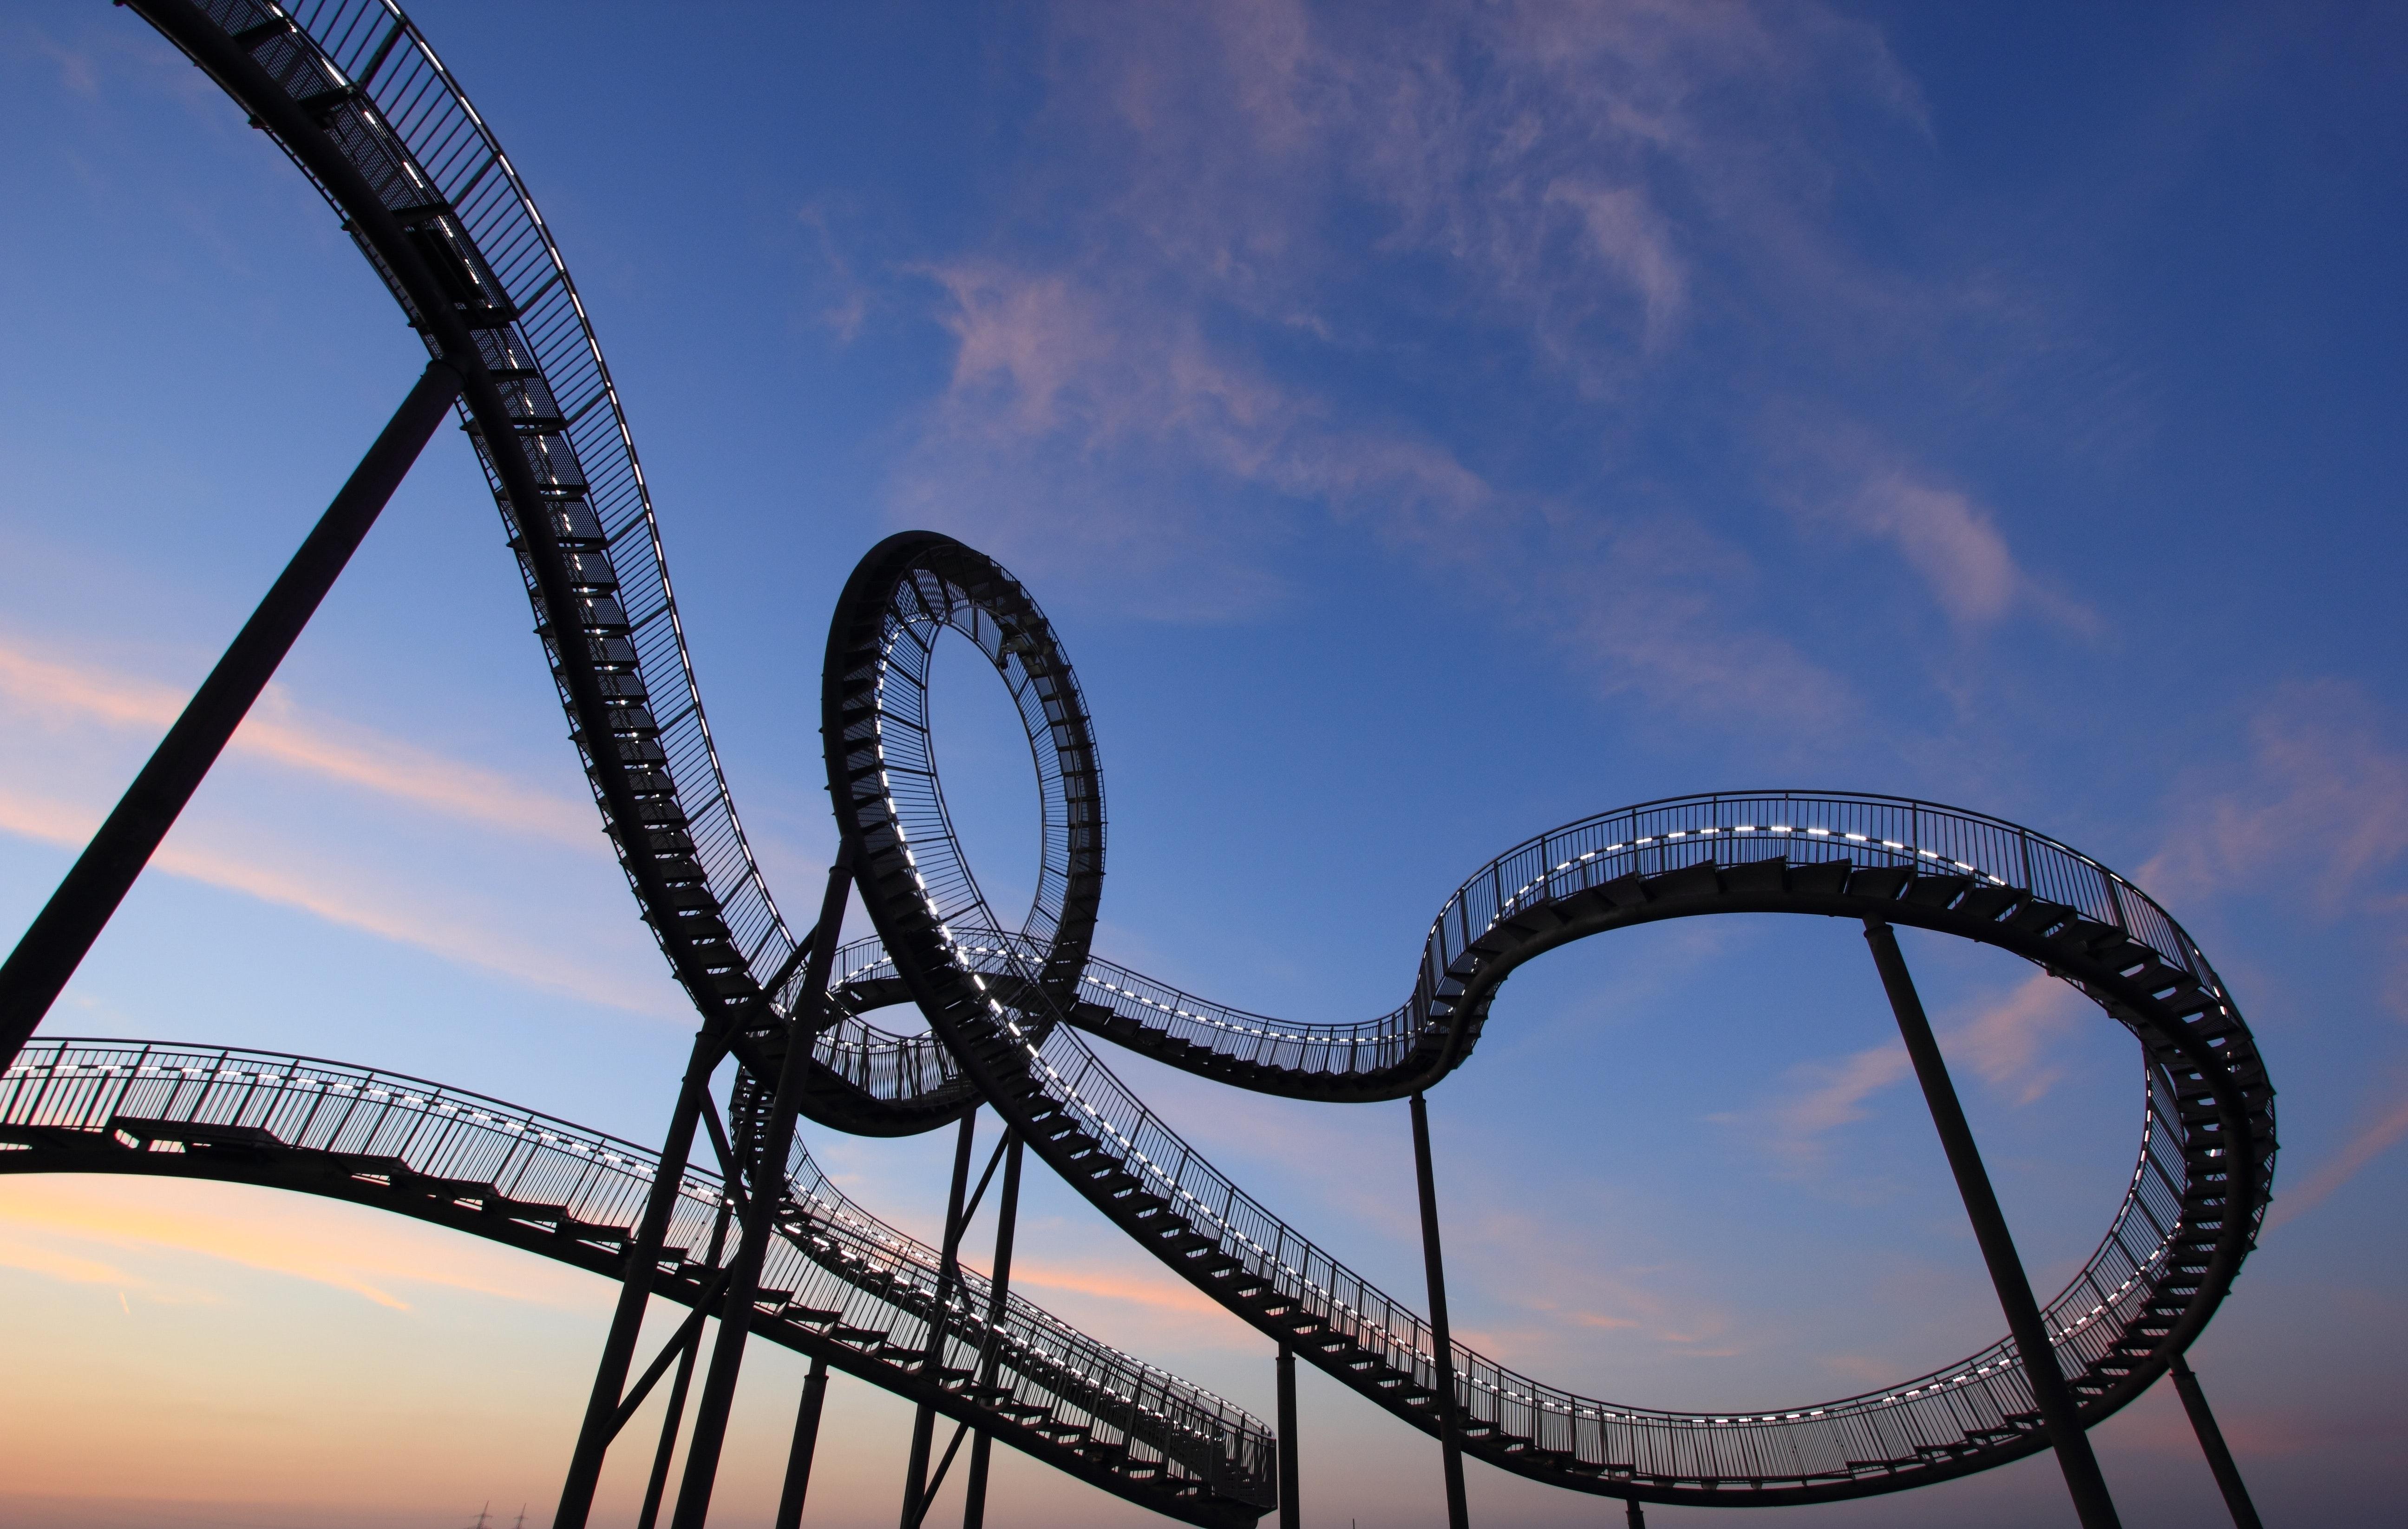 How would you describe a roller coaster ride? 